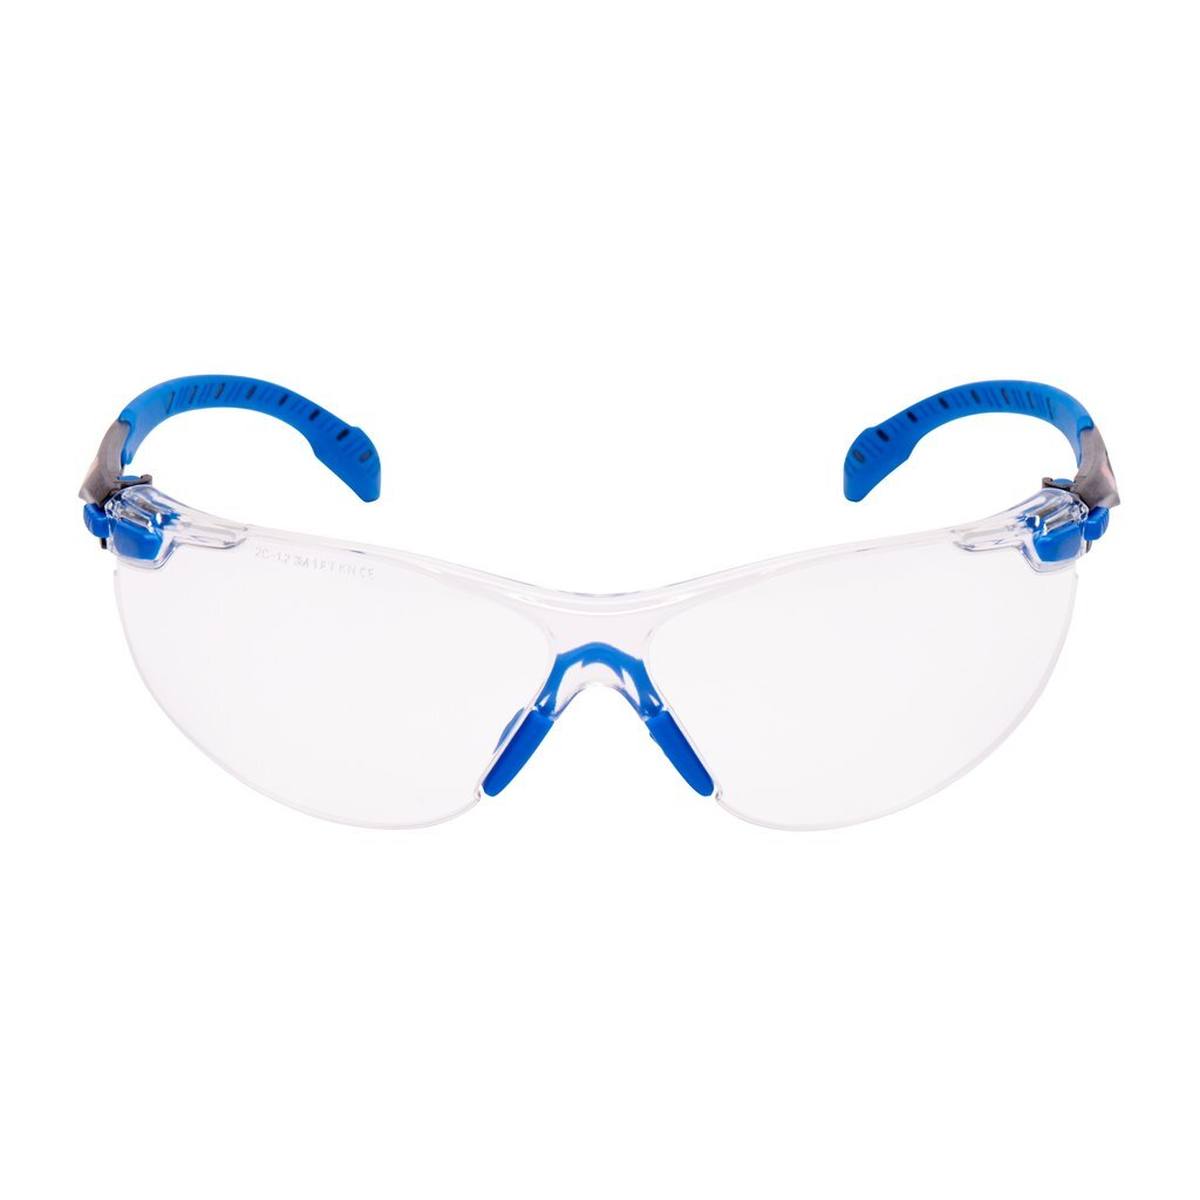 3M Solus 1000 safety spectacles, blue/black temples, Scotchgard anti-fog/anti-scratch coating (K&amp;N), clear lens, S1101SGAF-EU